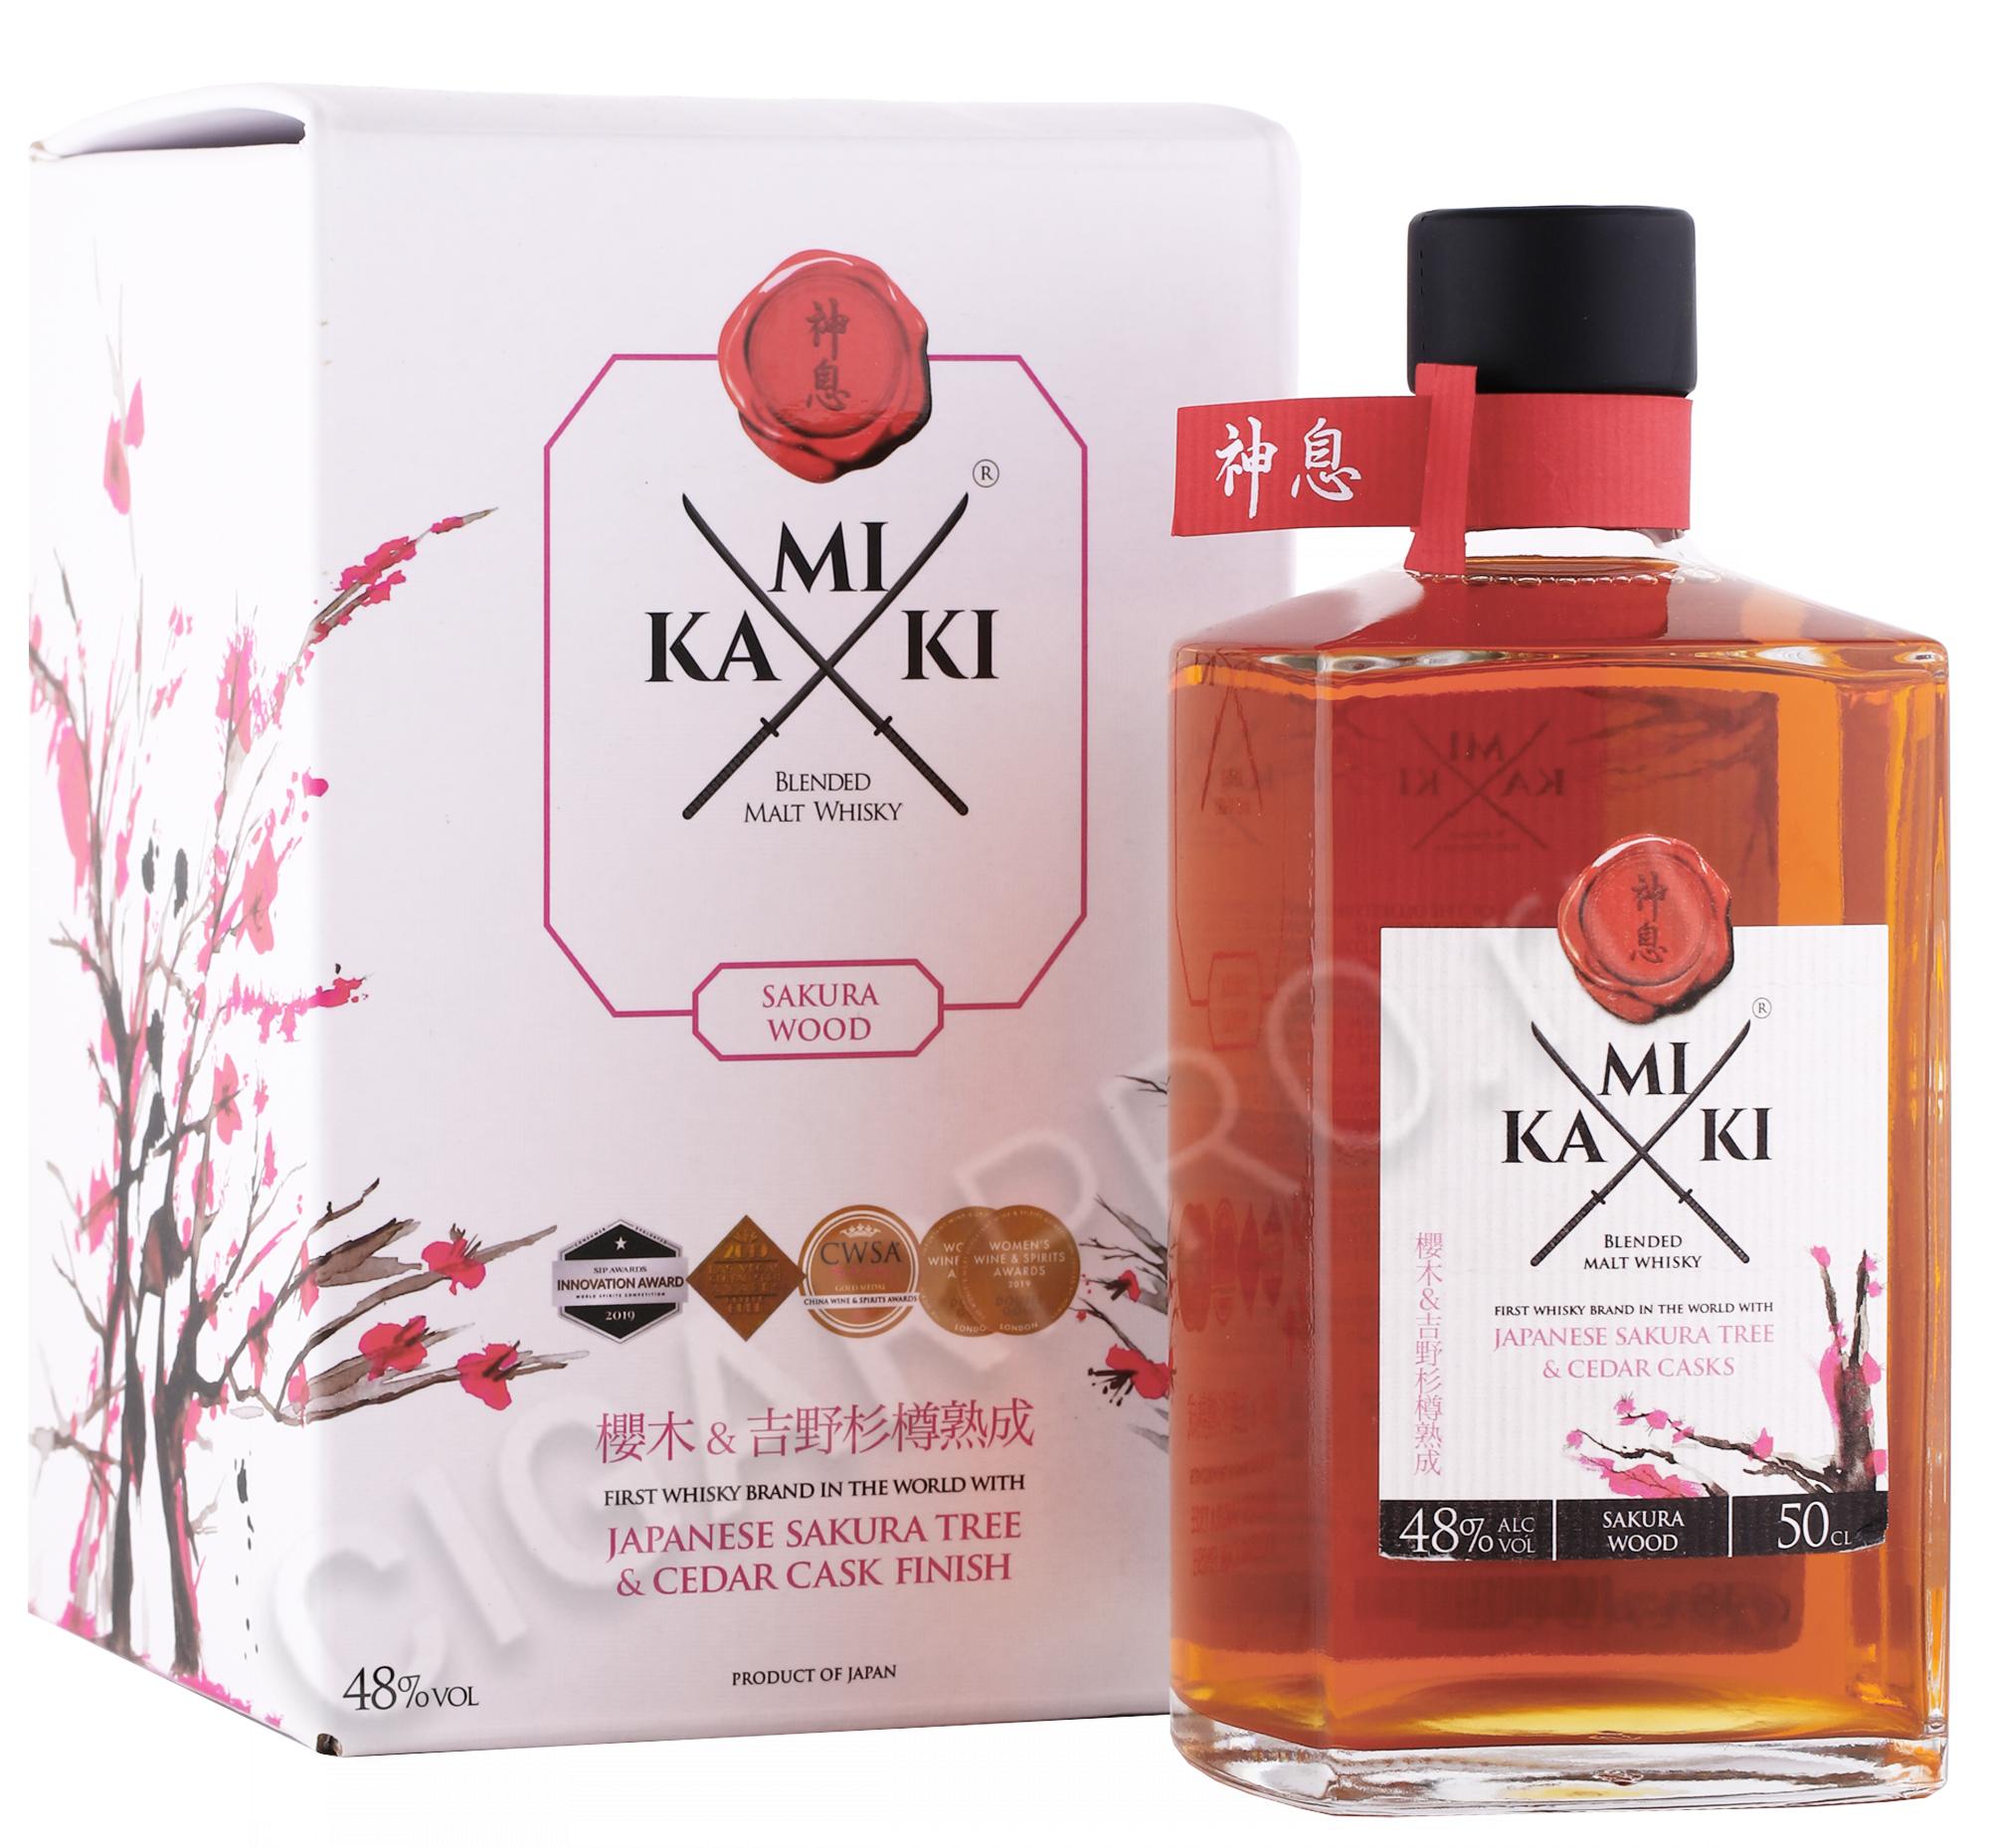 Kamiki Sakura Wood Blended Malt Виски Камики Сакура Вуд 0.5л в подарочной у...